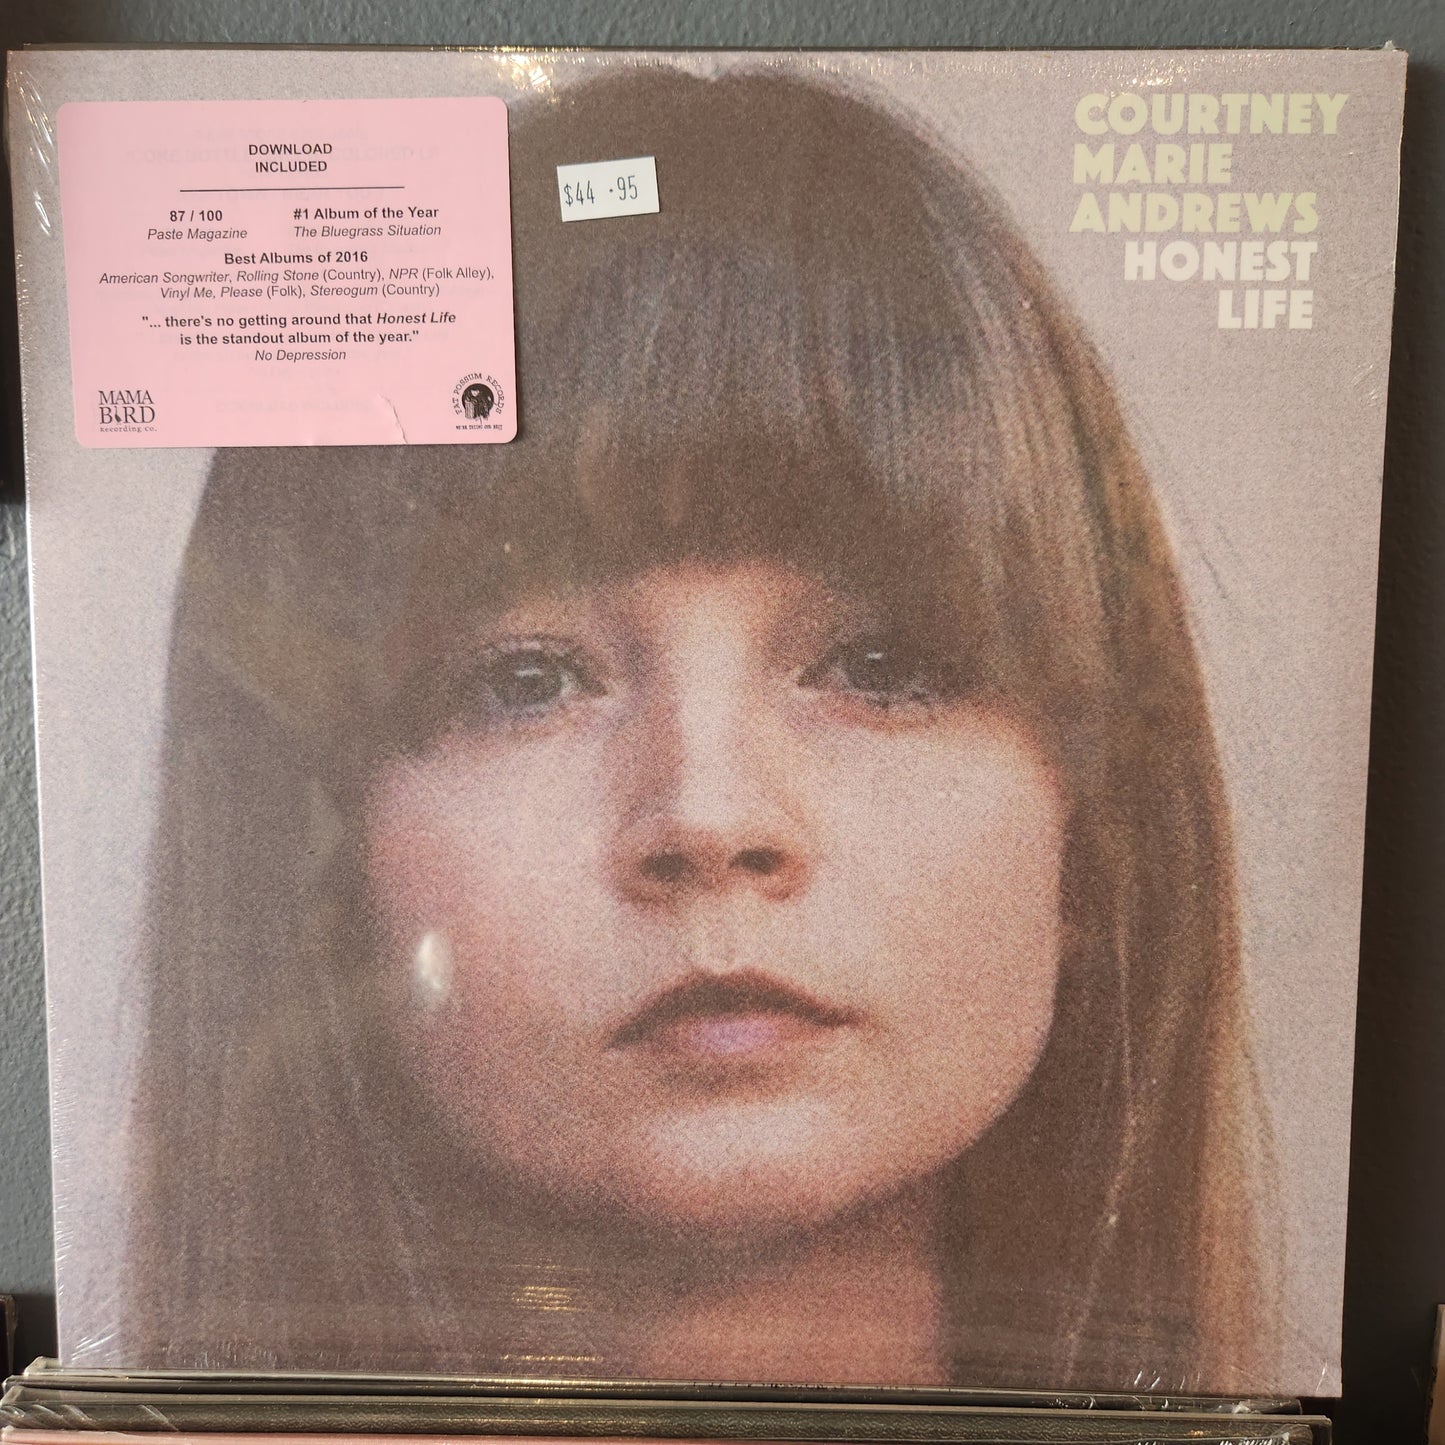 Courtney Marie Andrews - Honest Life - Vinyl LP